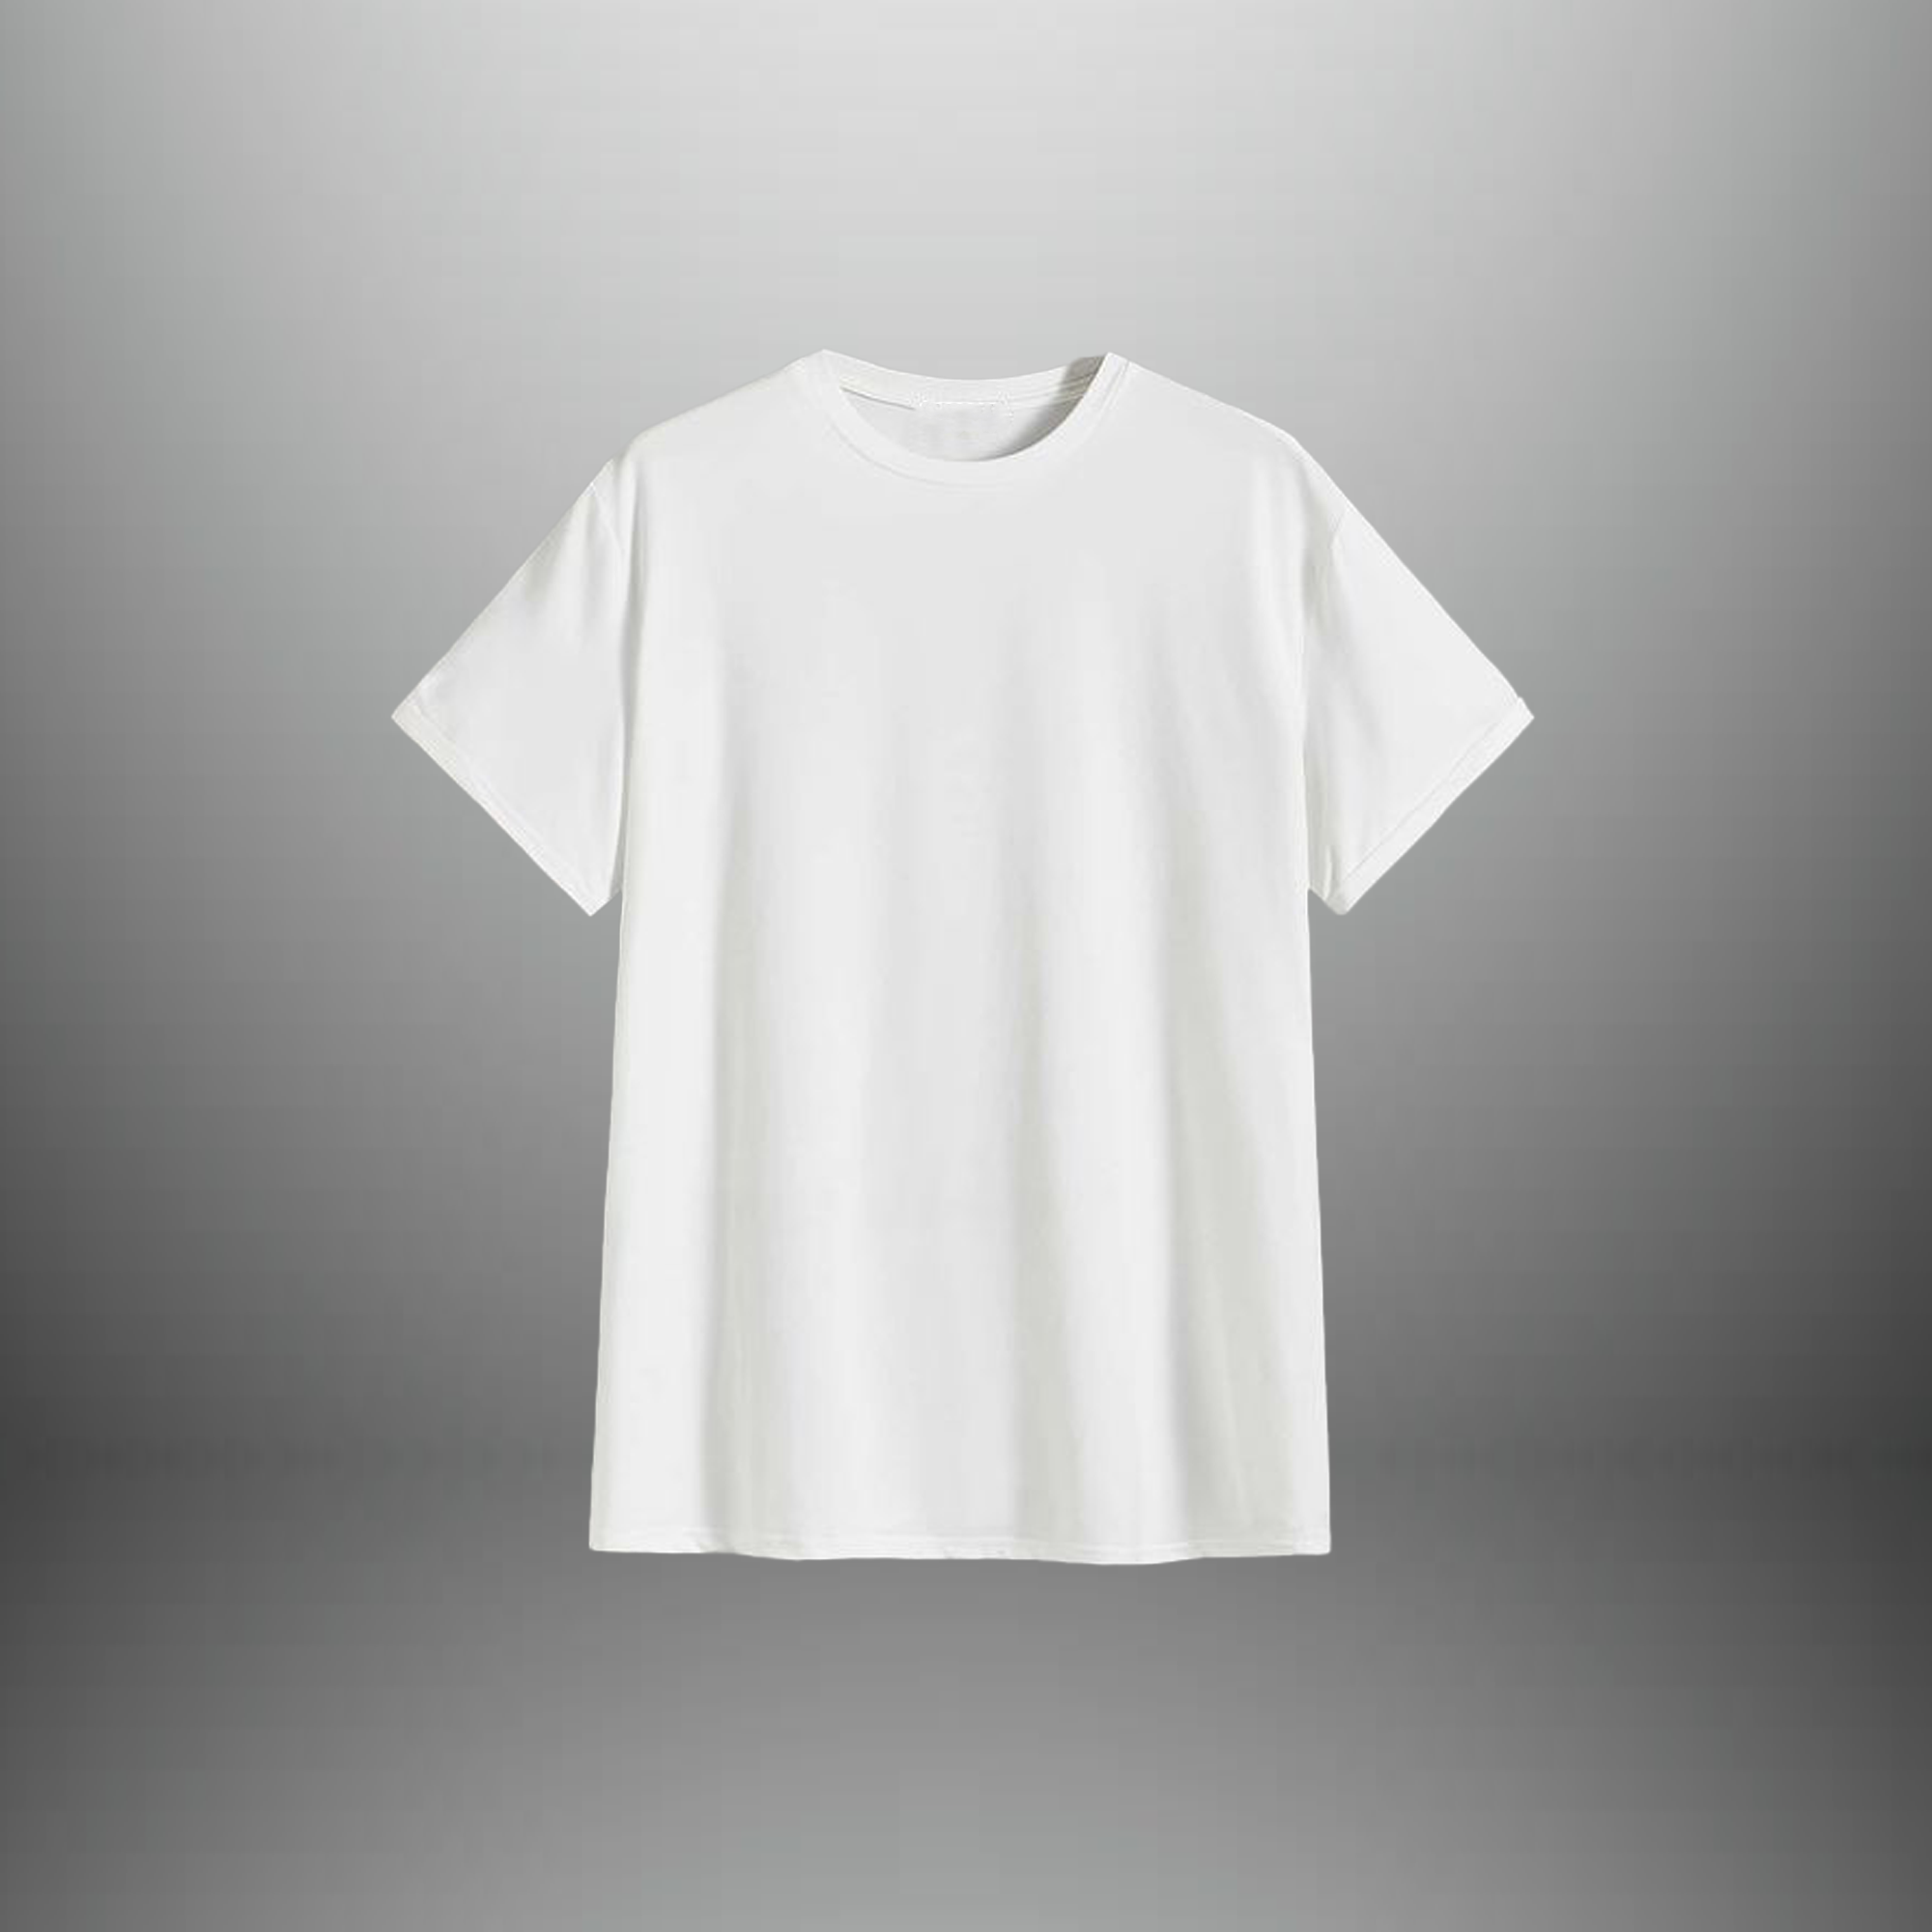 Men's Black Corduroy Shirt with Pocket and A Plain white T-shirt-RMS034